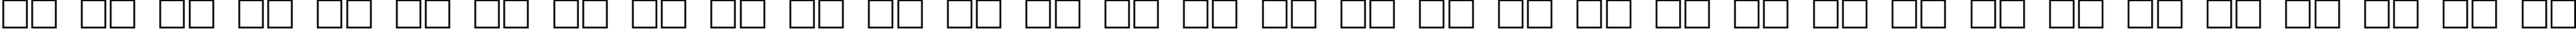 Пример написания русского алфавита шрифтом AGHlvCyrillic Bold105b